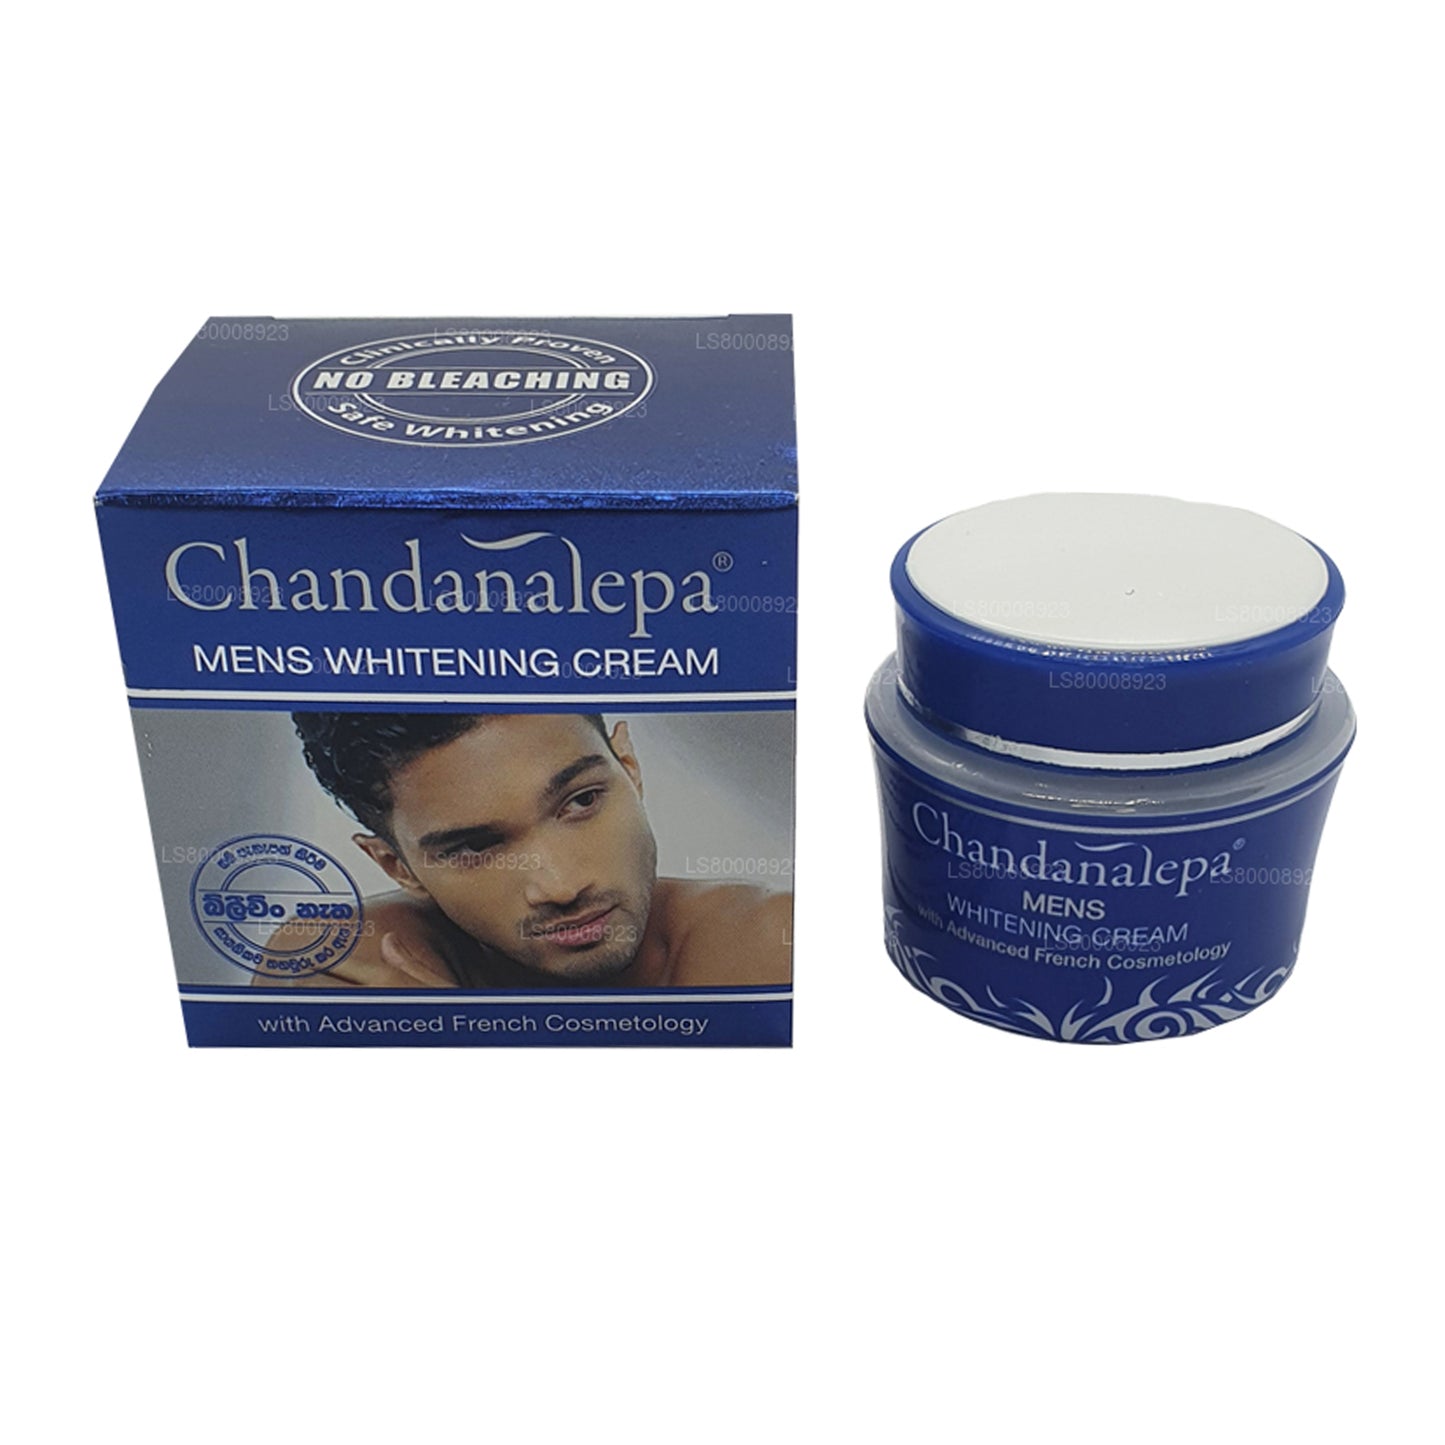 Crema sbiancante da uomo Chandanalepa (20g)